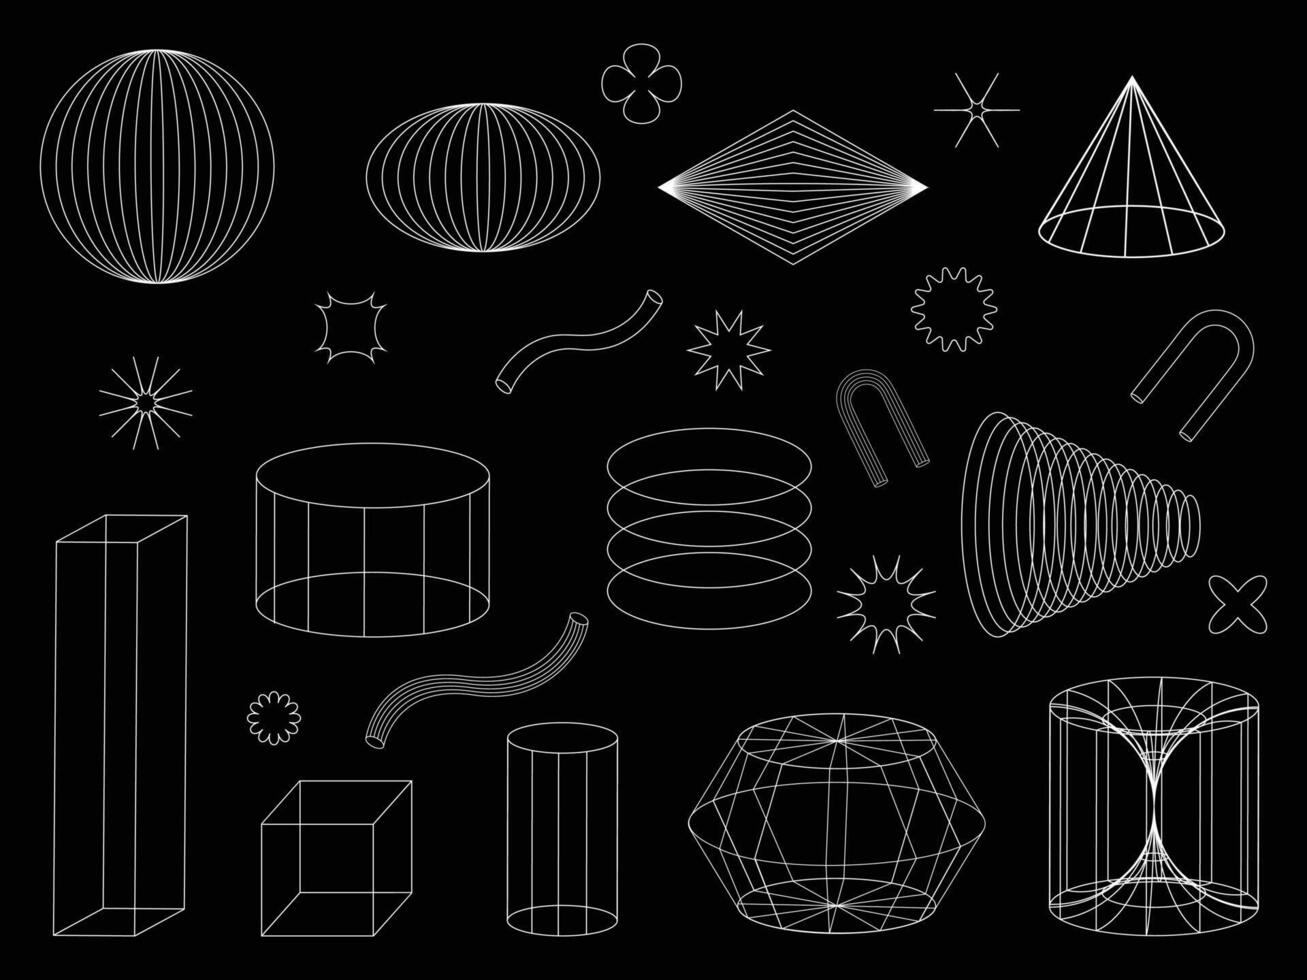 conjunto do abstrato estético ano 2000 geométrico elementos e 3d estrutura de arame formas. vetor